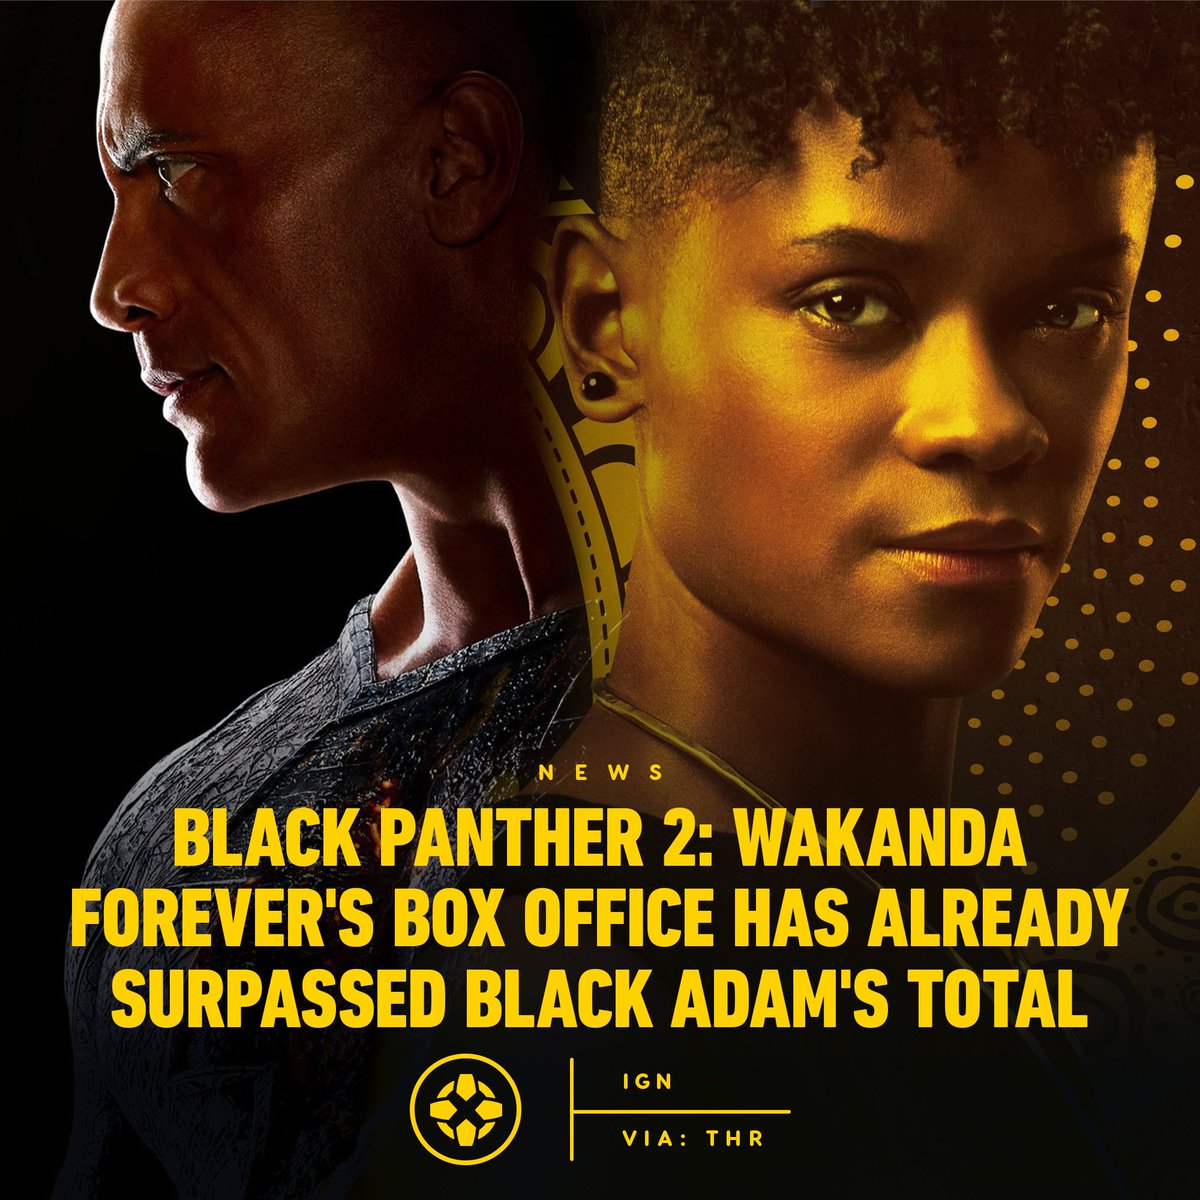 Jonathan Ortega on Twitter: "RT @IGN: Black Panther: Wakanda Forever